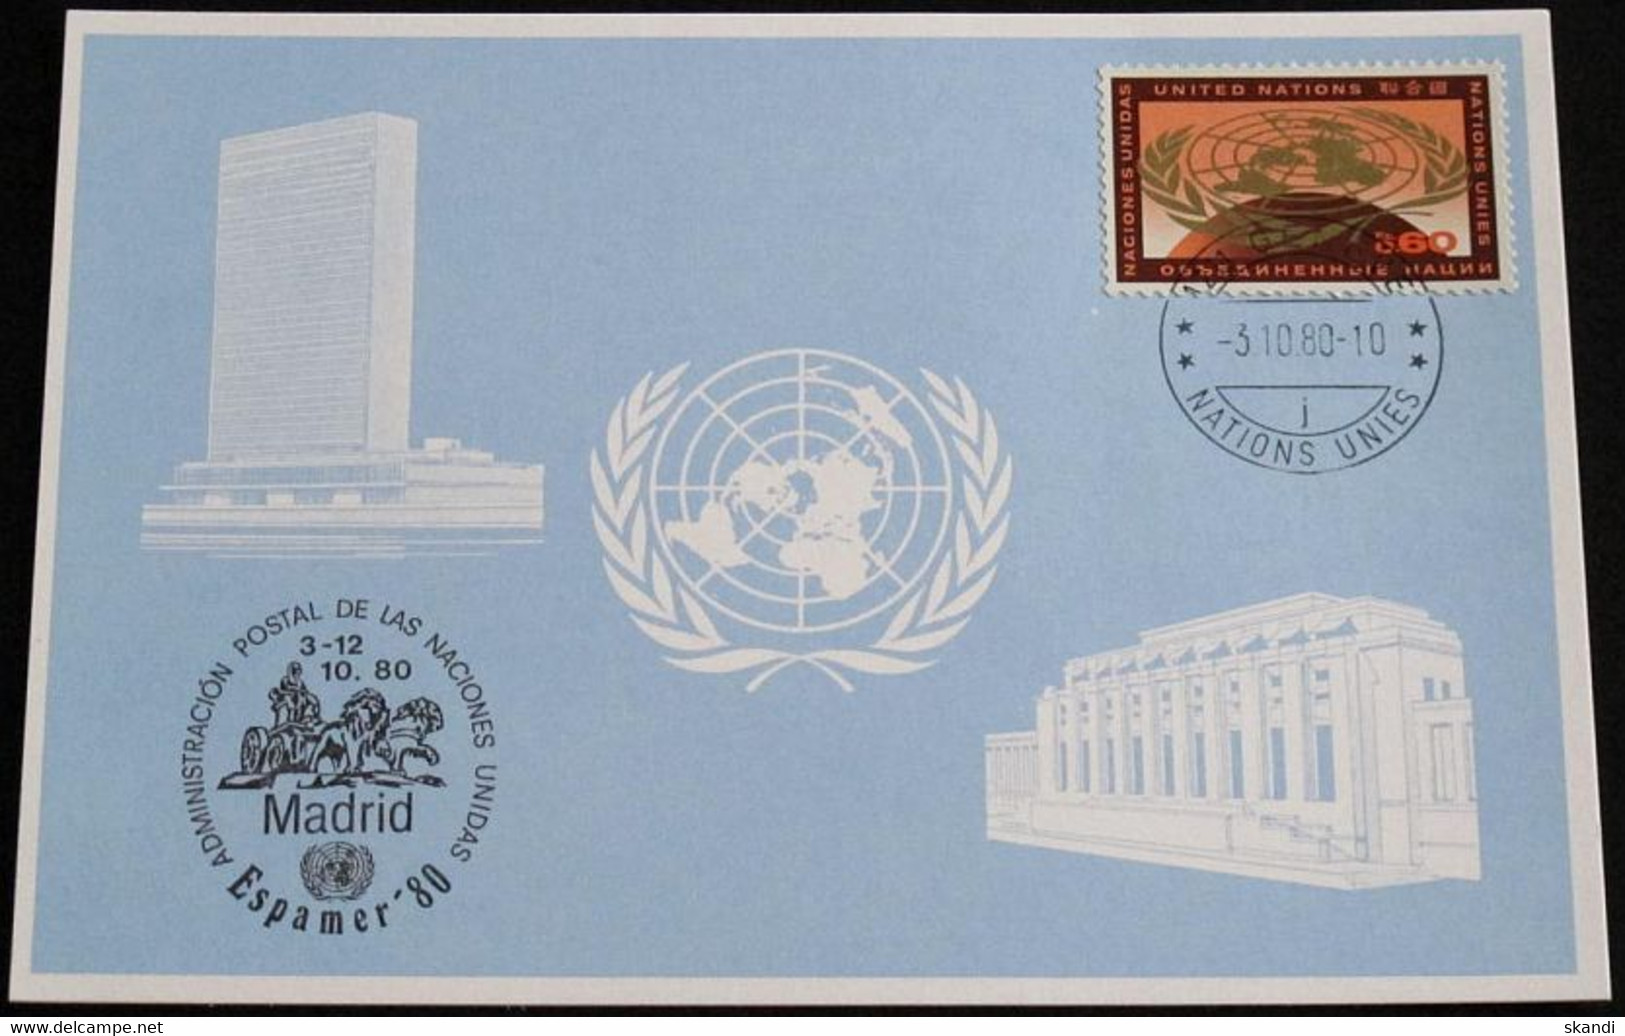 UNO GENF 1980 Mi-Nr. 93 Blaue Karte - Blue Card Mit Erinnerungsstempel ESPAMER 80 MADRID - Covers & Documents